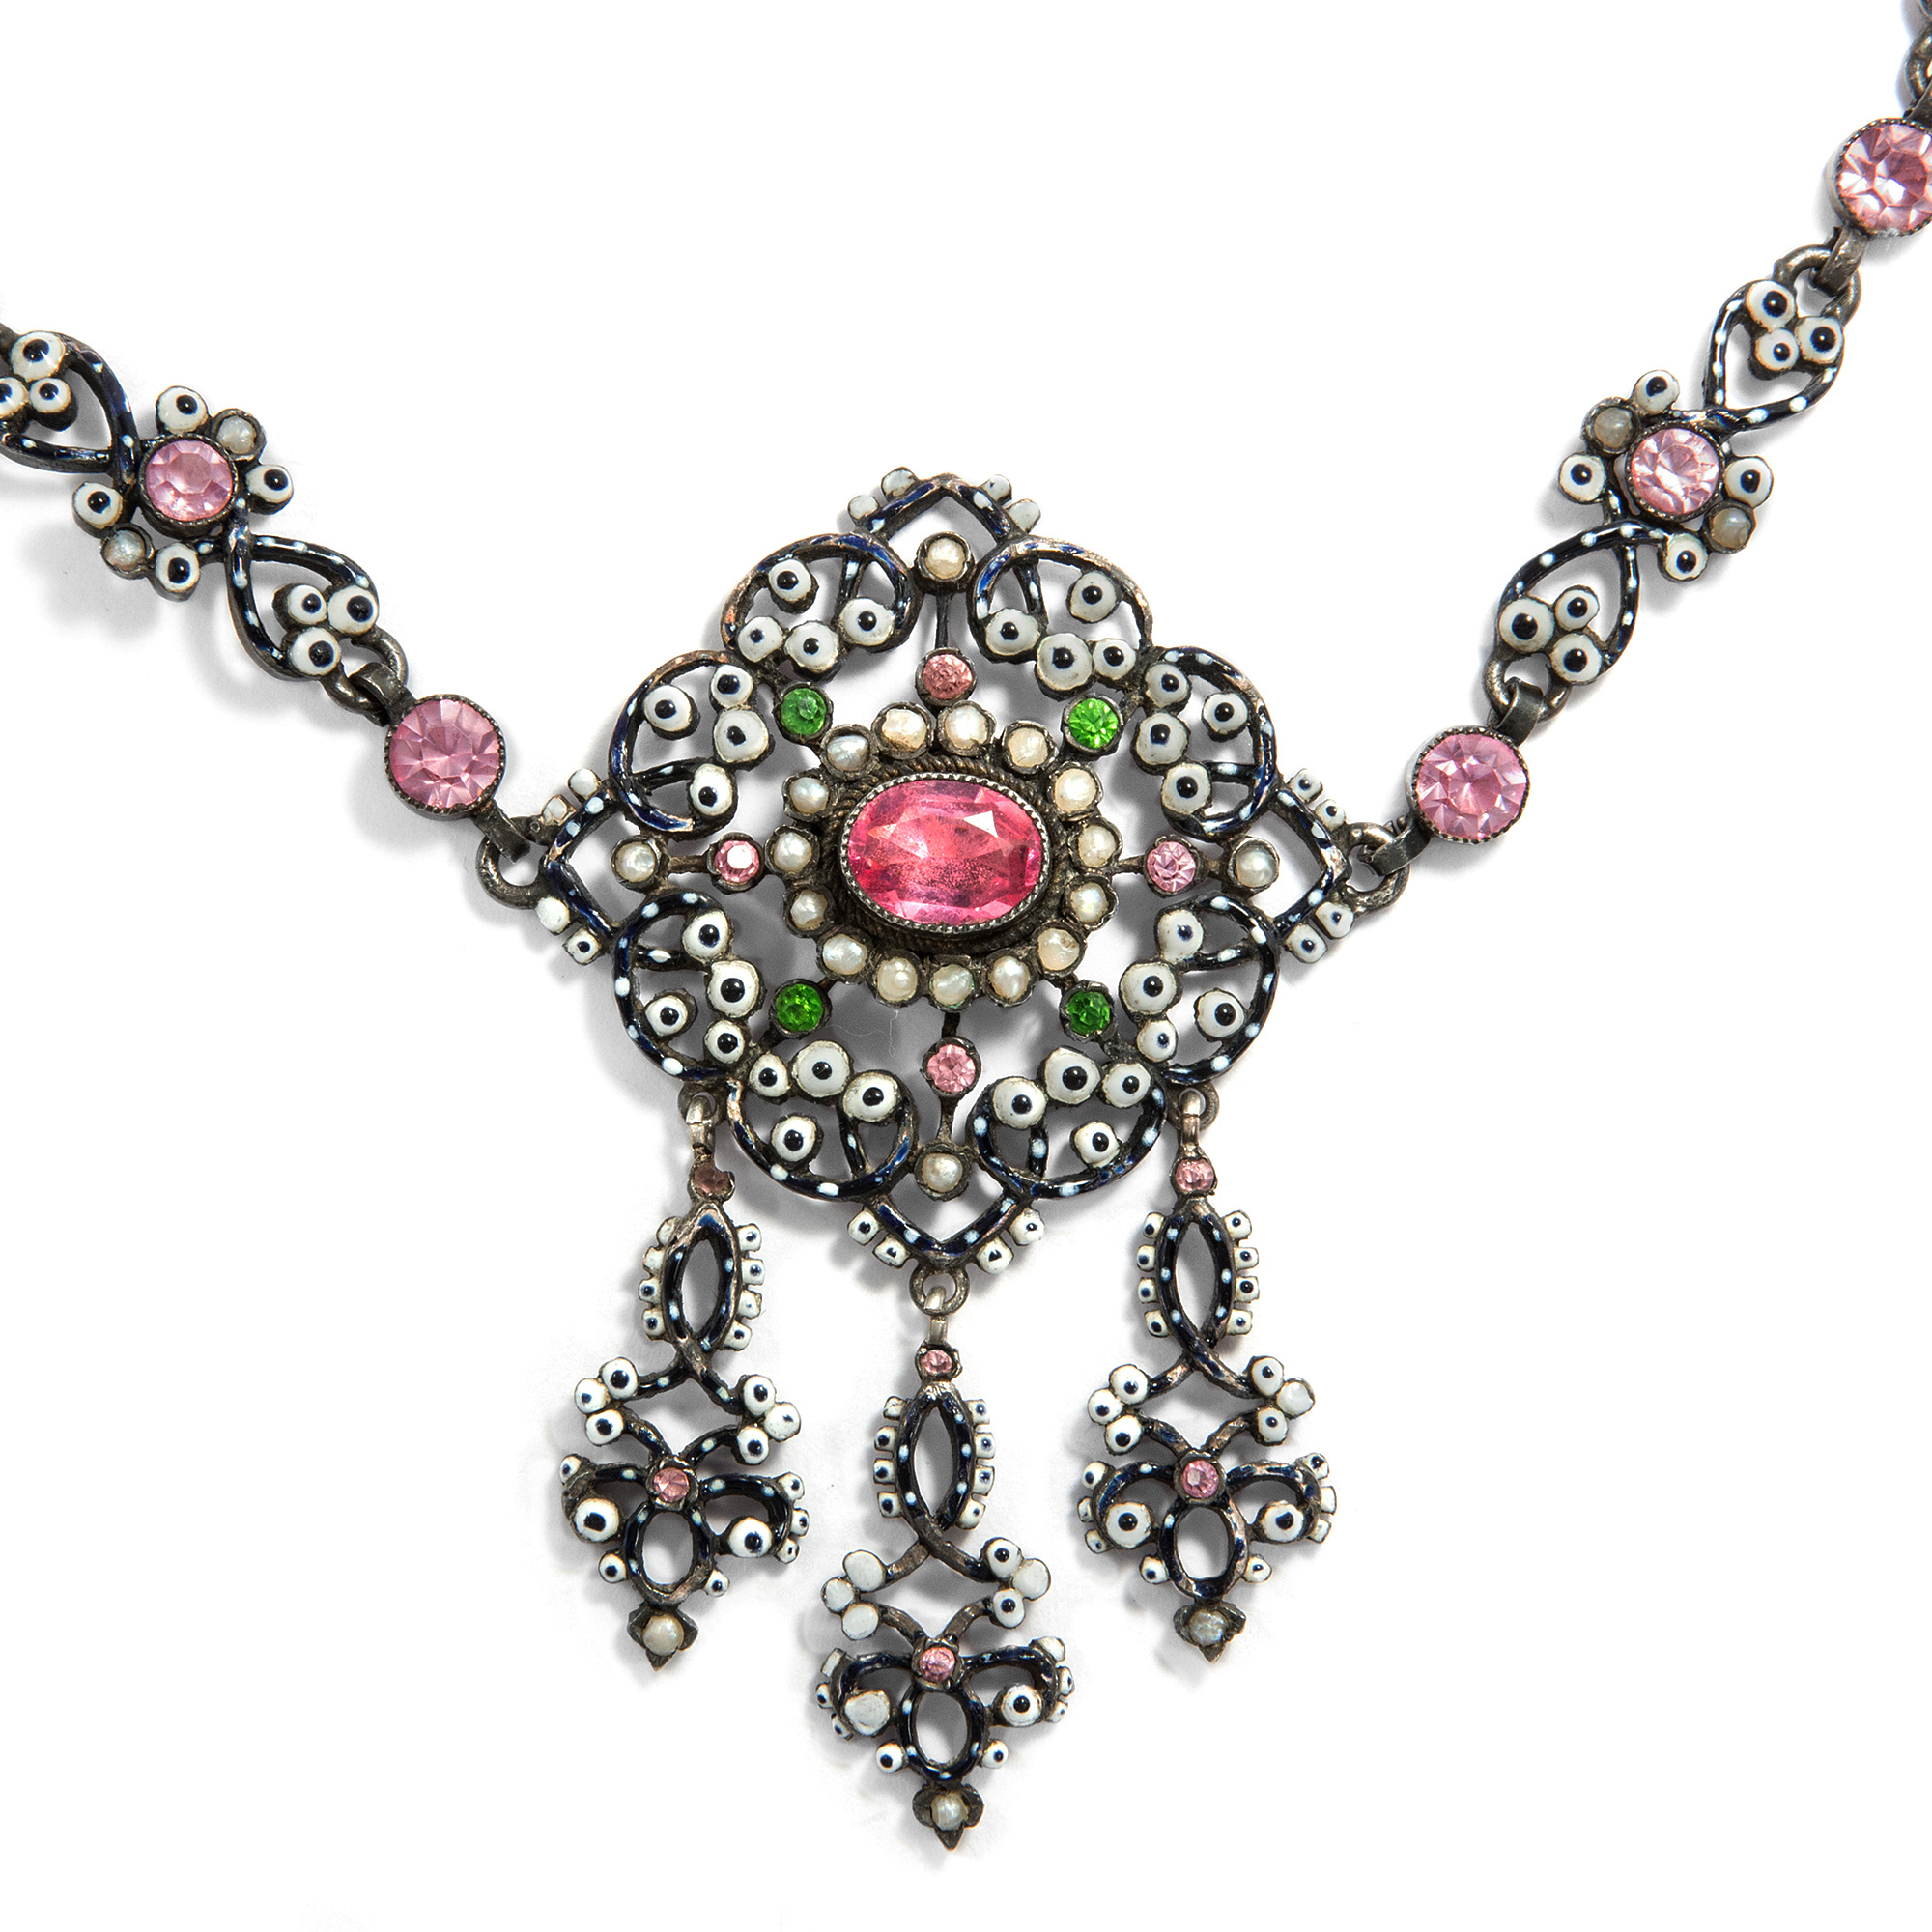 Splendid necklace of historicism in silver, pearls & enamel, 1870s